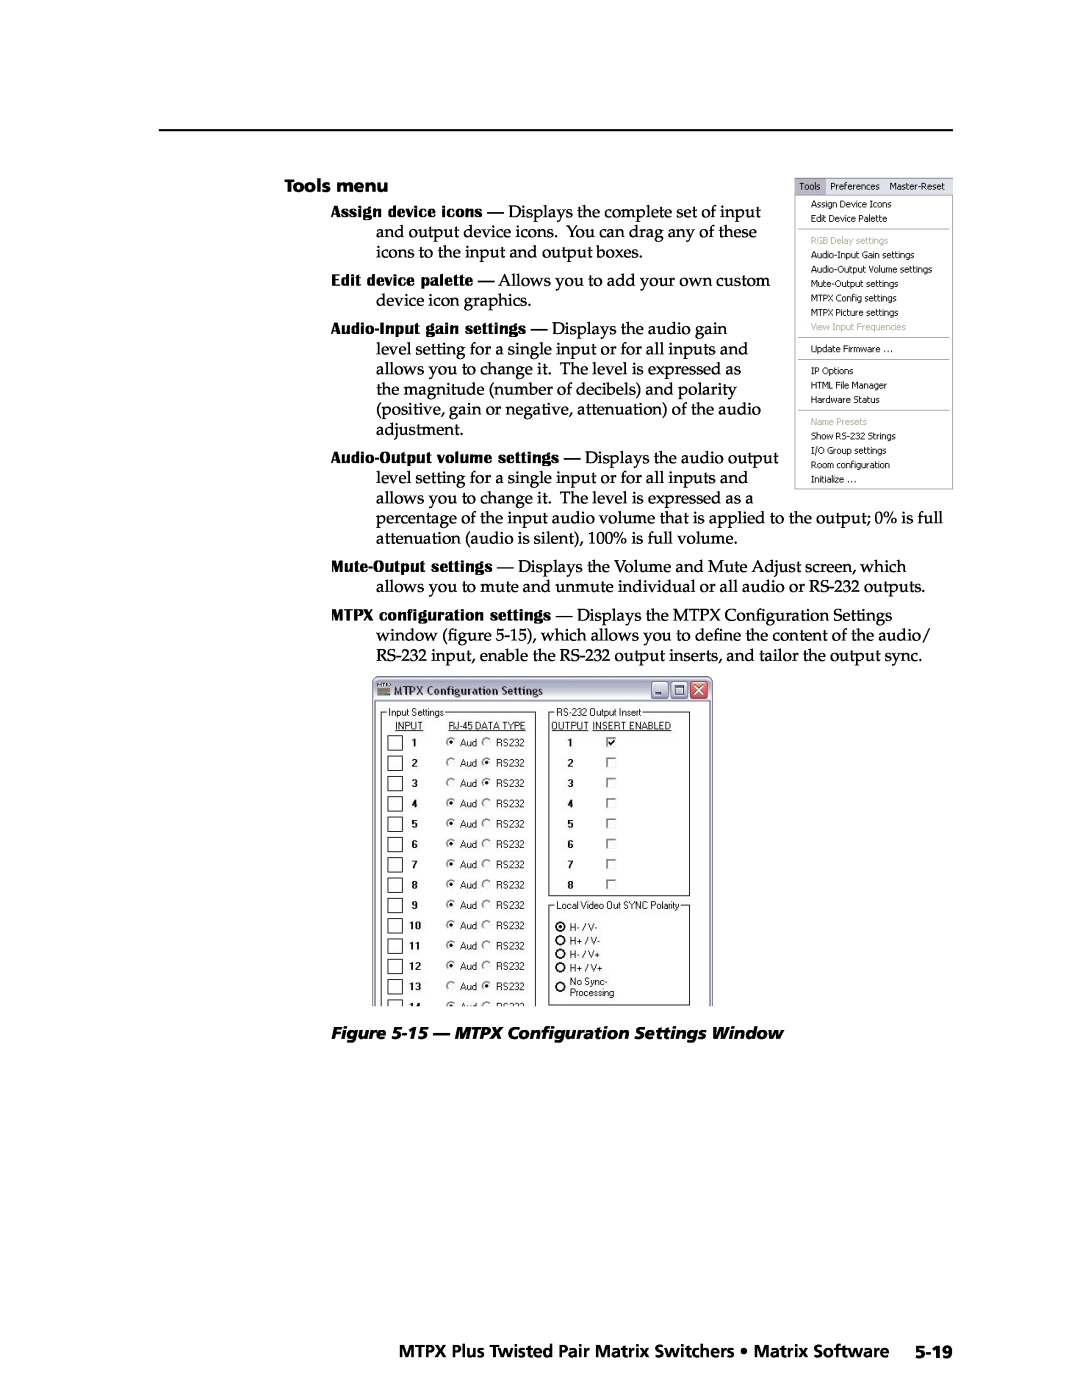 Extron electronic MTPX Plus Series manual Tools menu, 15 - MTPX Configuration Settings Window 